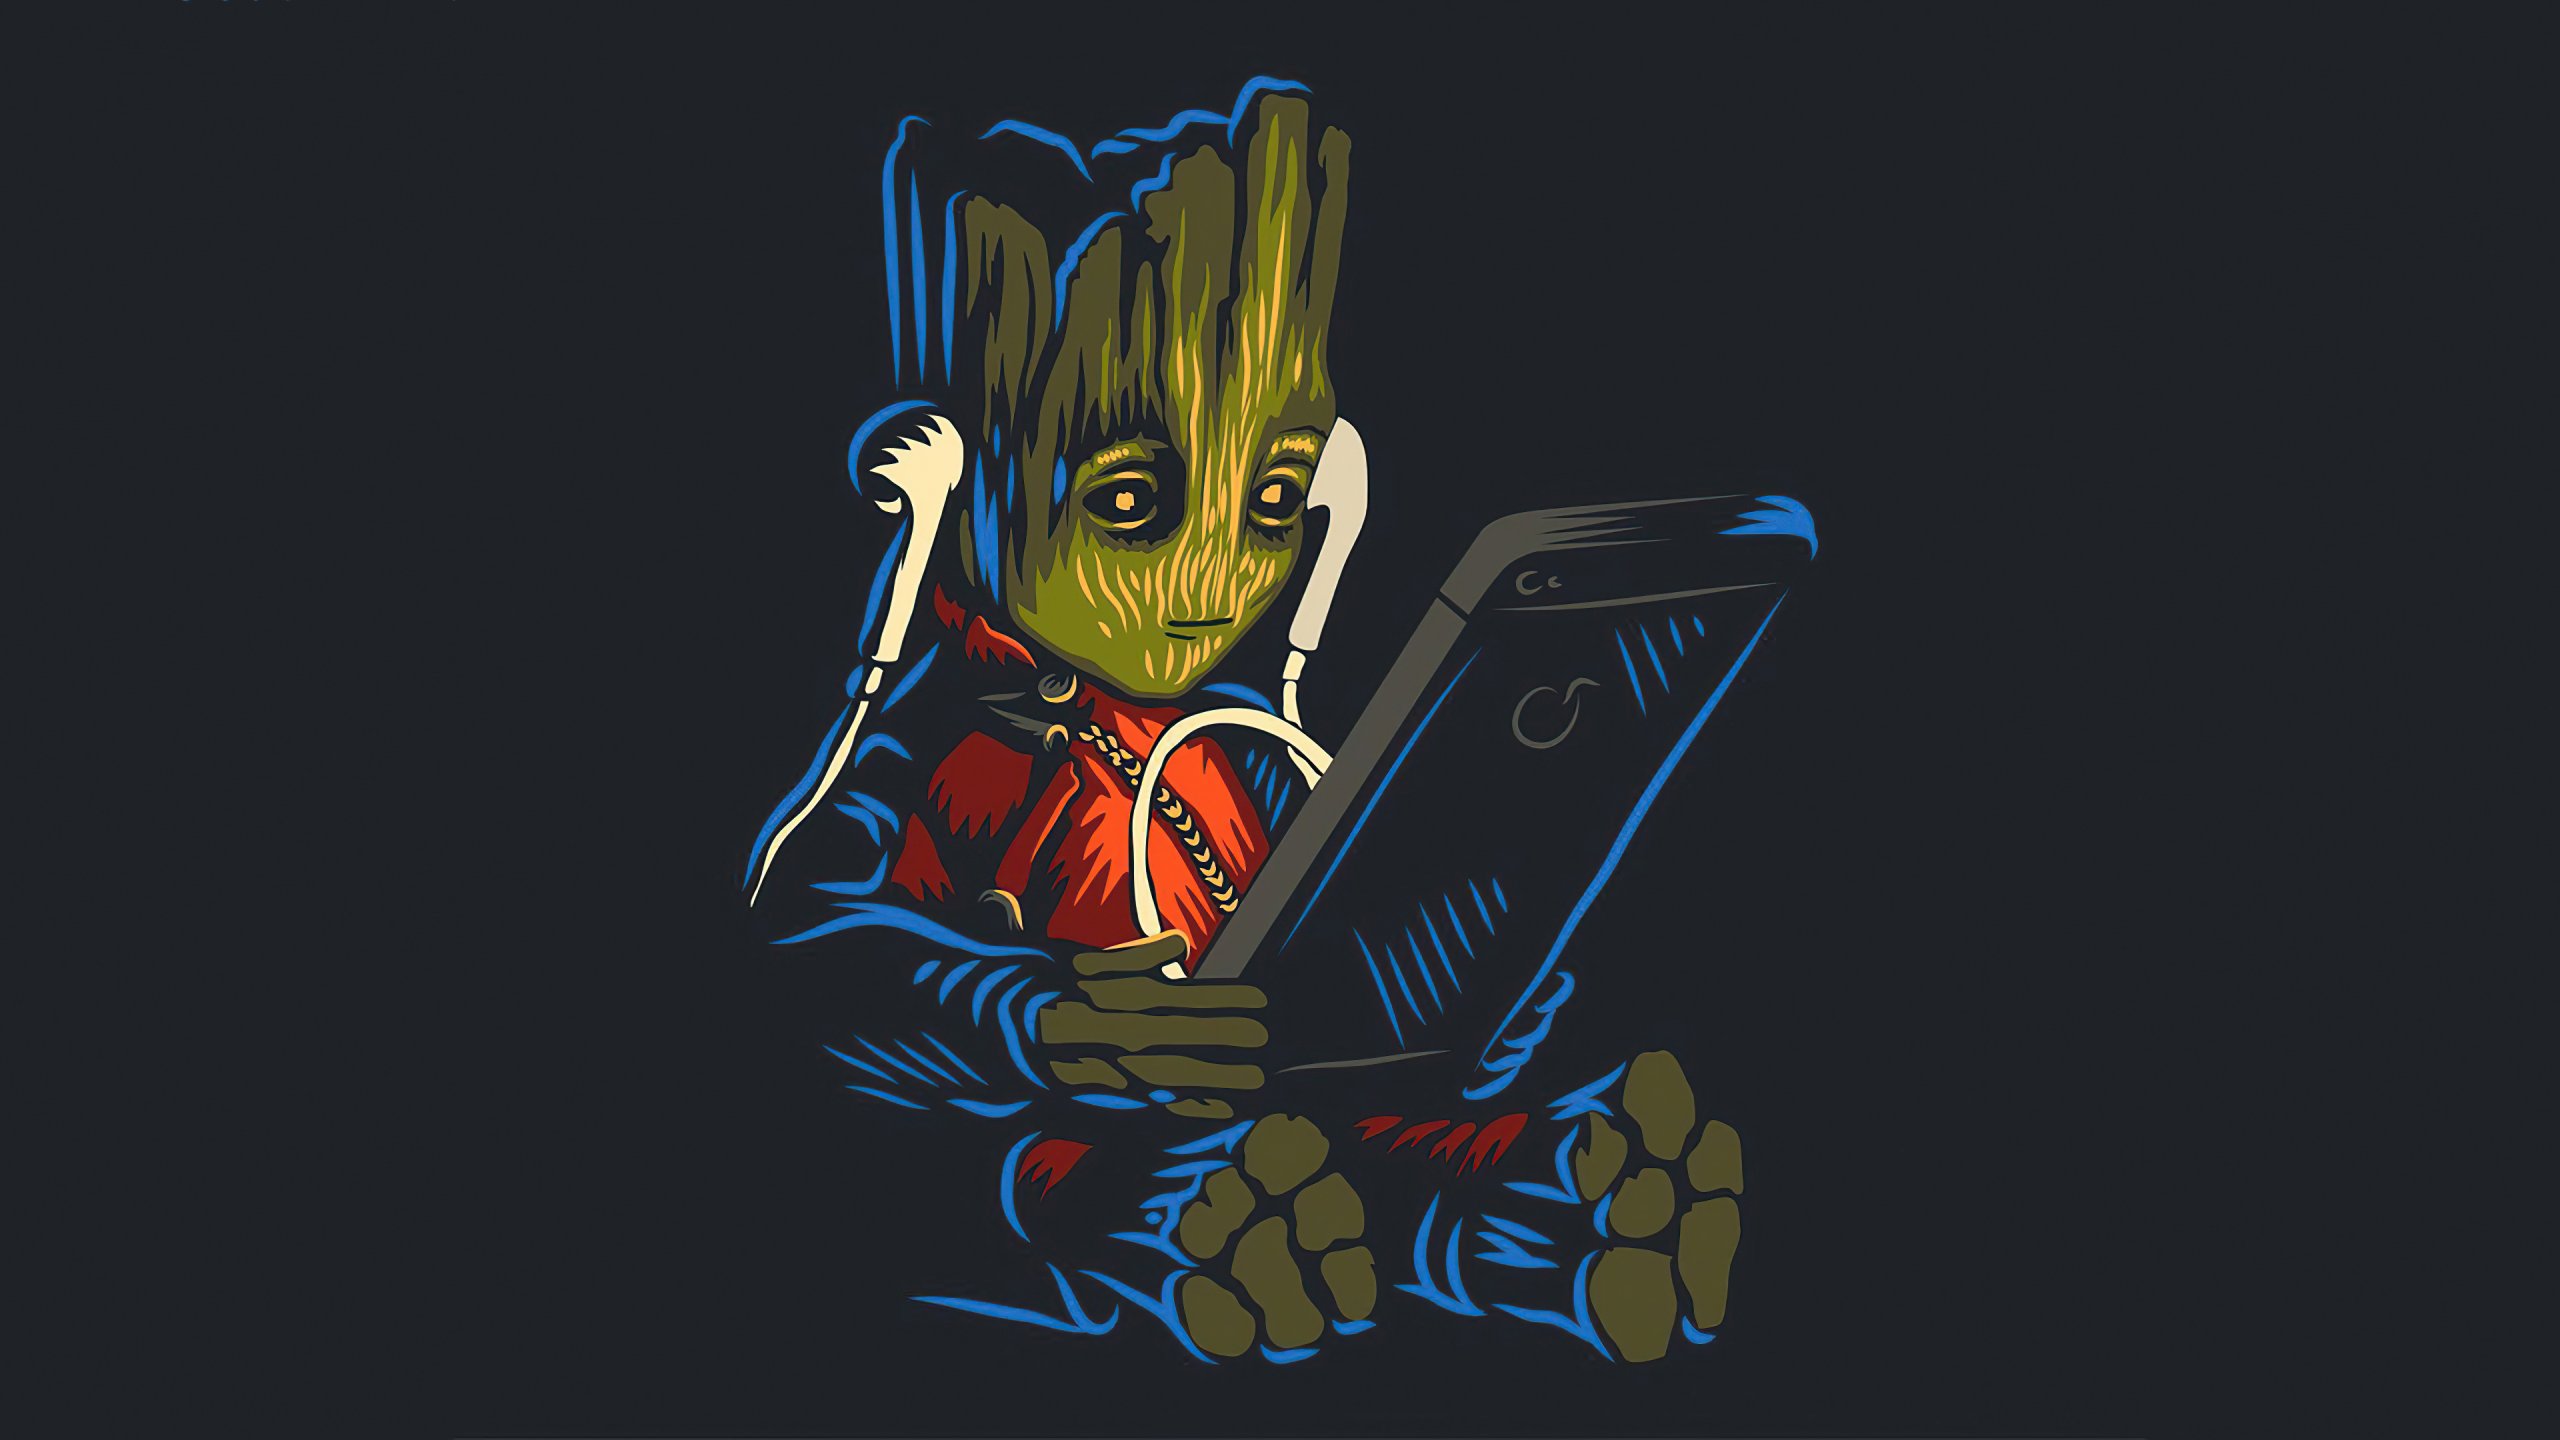 Baby Groot listening to music Wallpaper 4k Ultra HD ID:6450